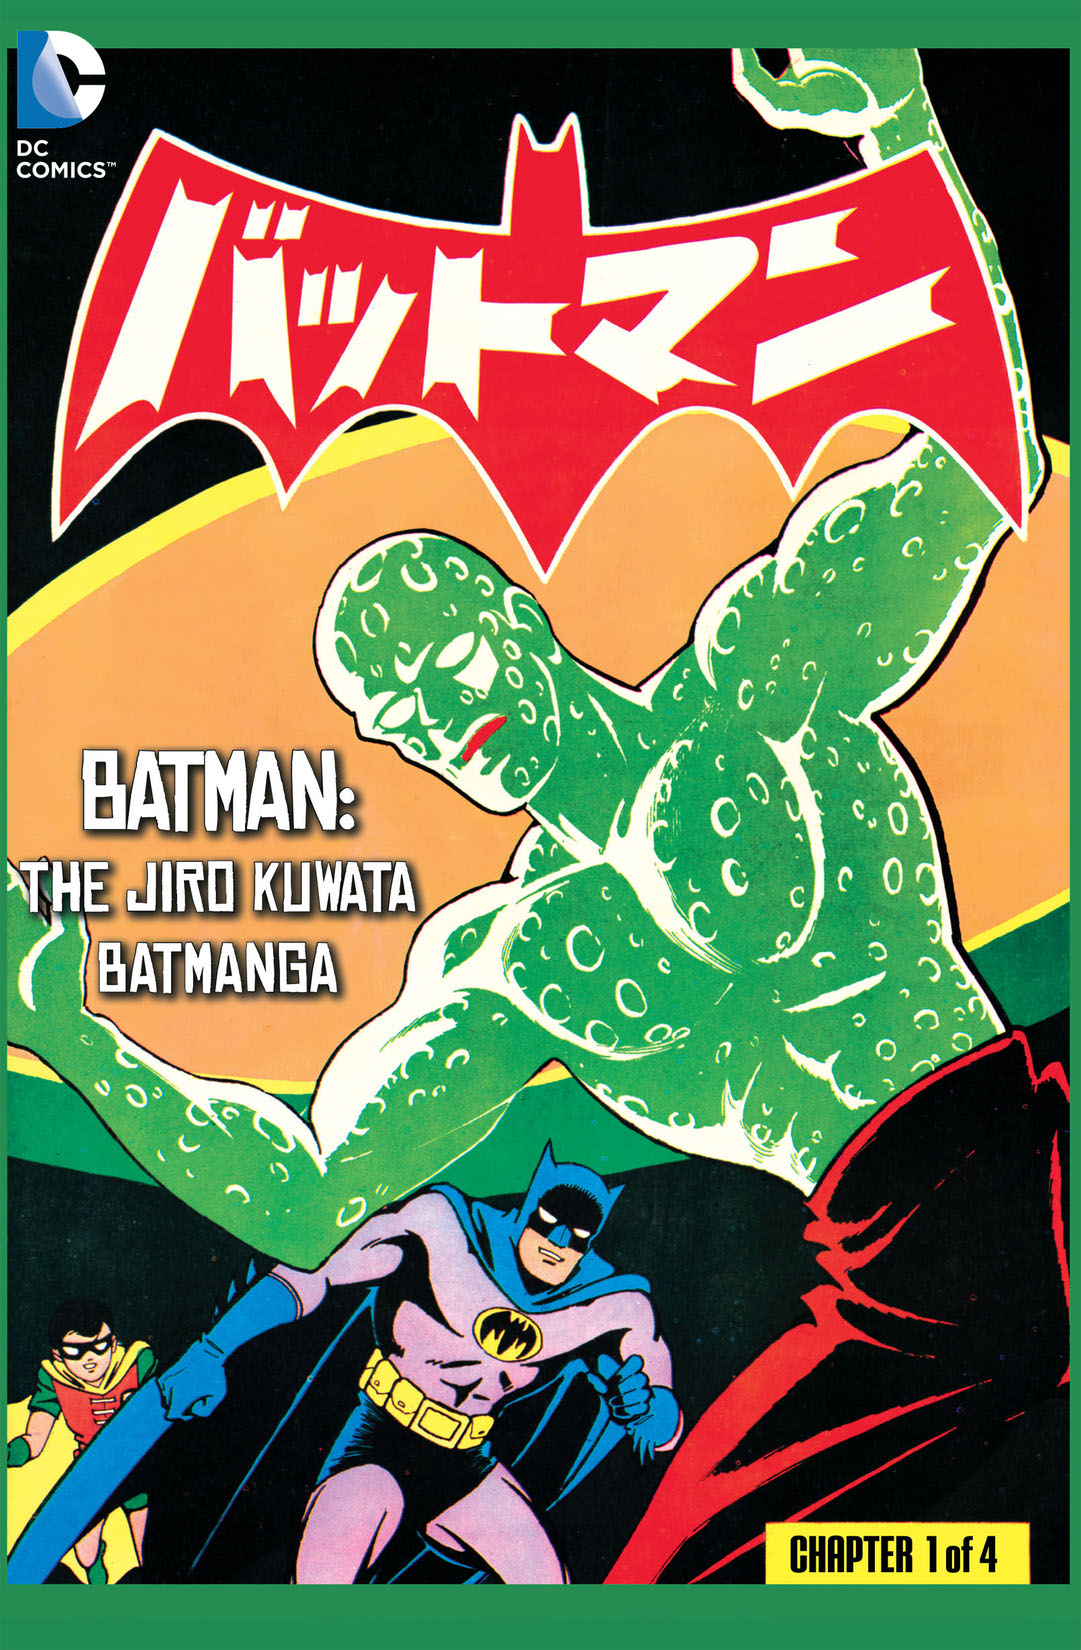 Batman: The Jiro Kuwata Batmanga #31 preview images